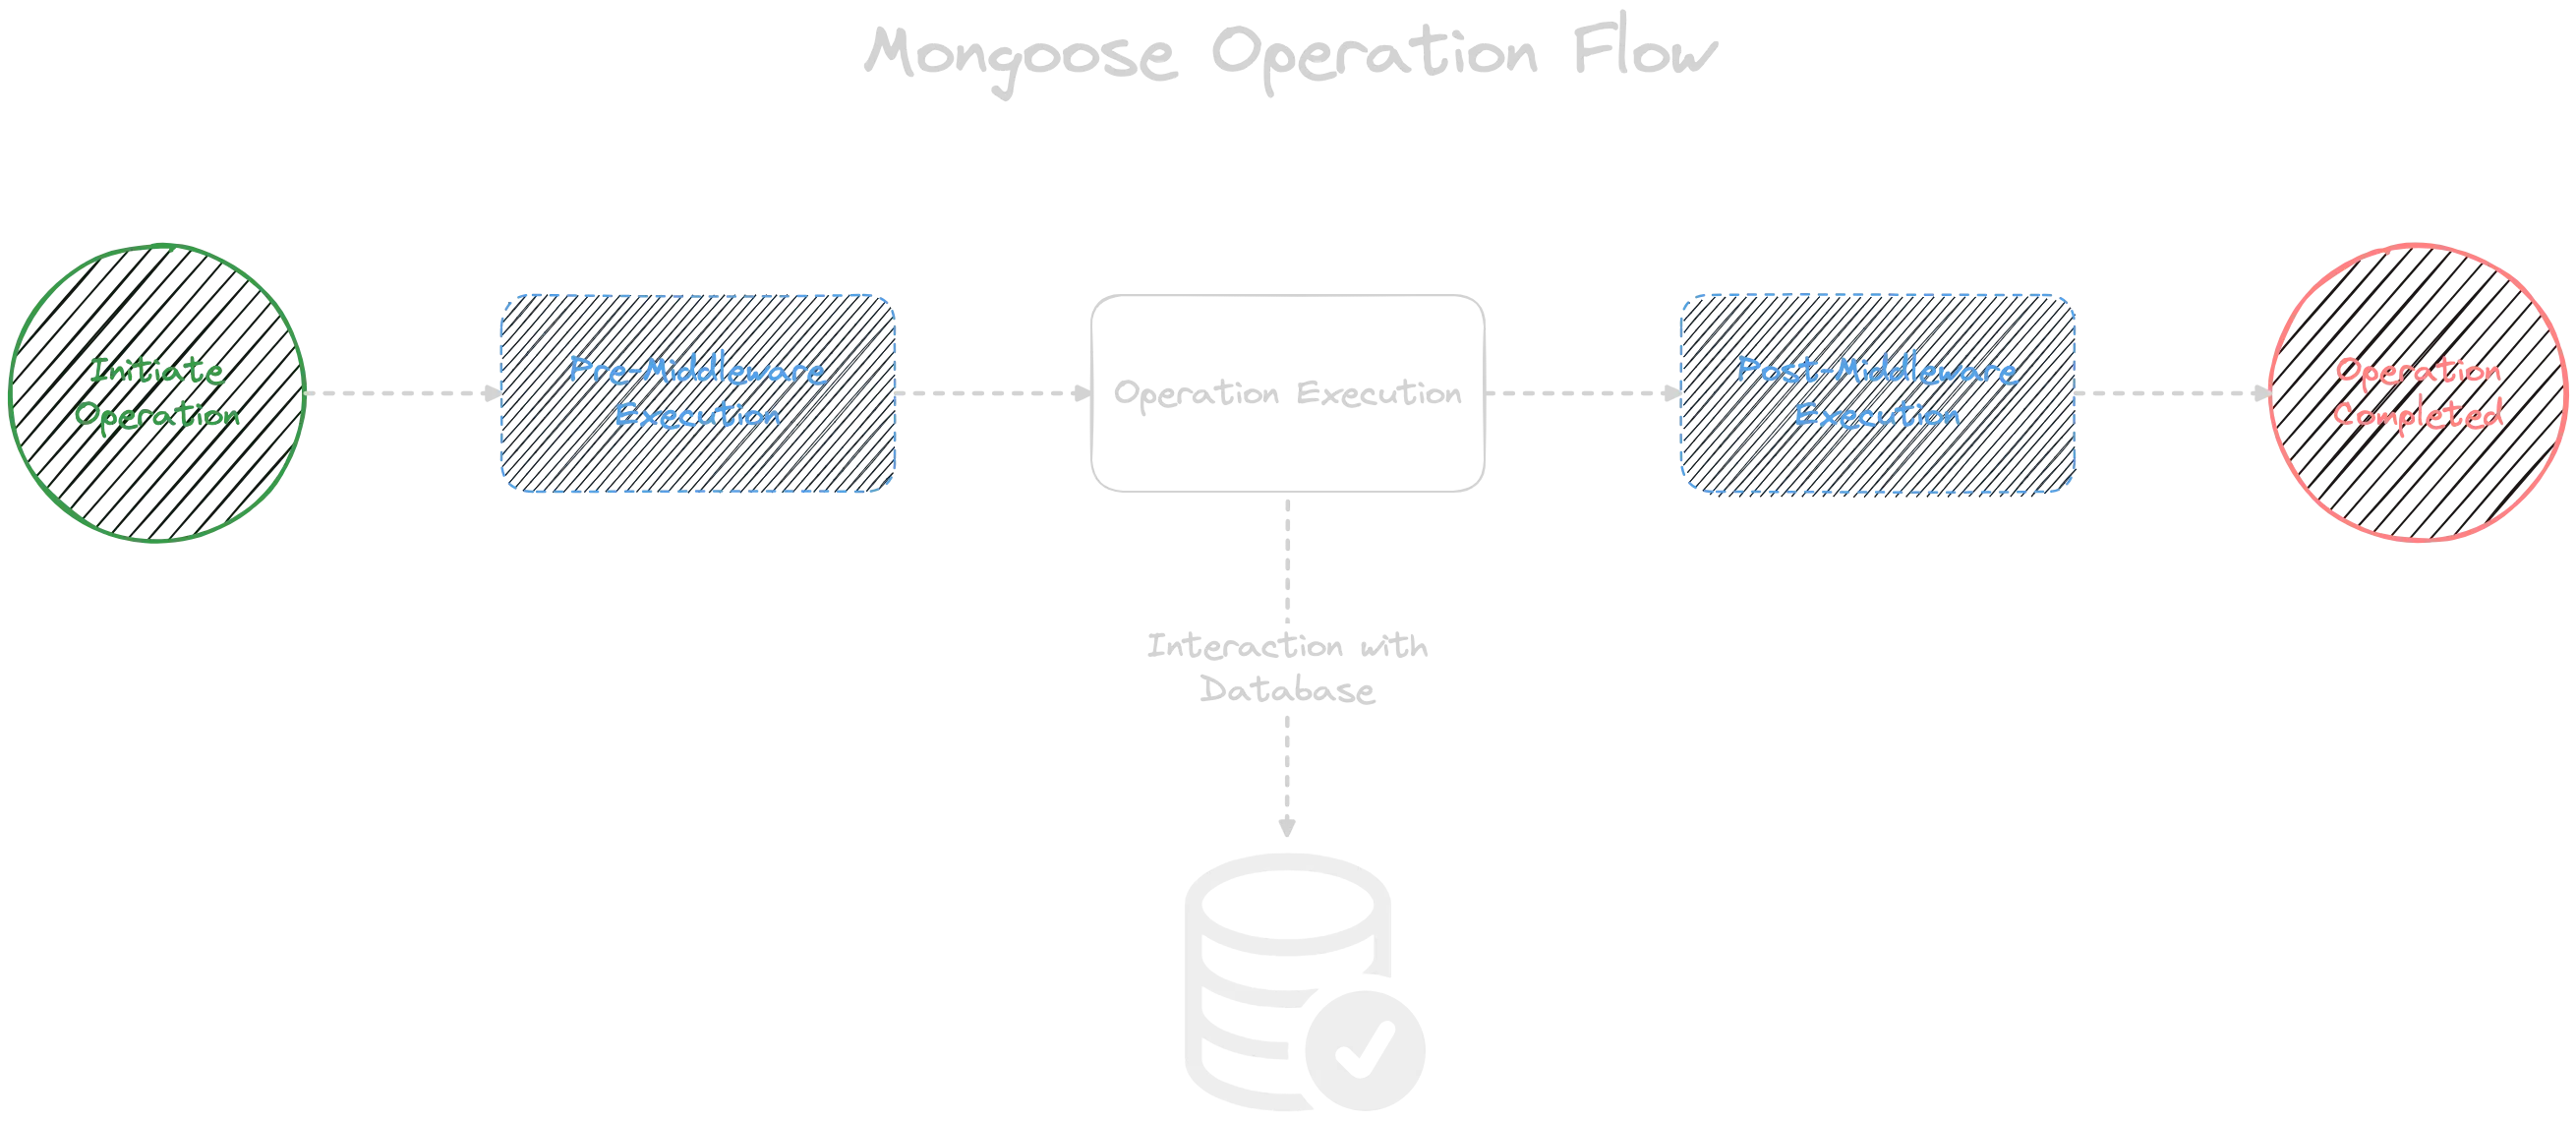 Mongoose Operation Workflow Diagram